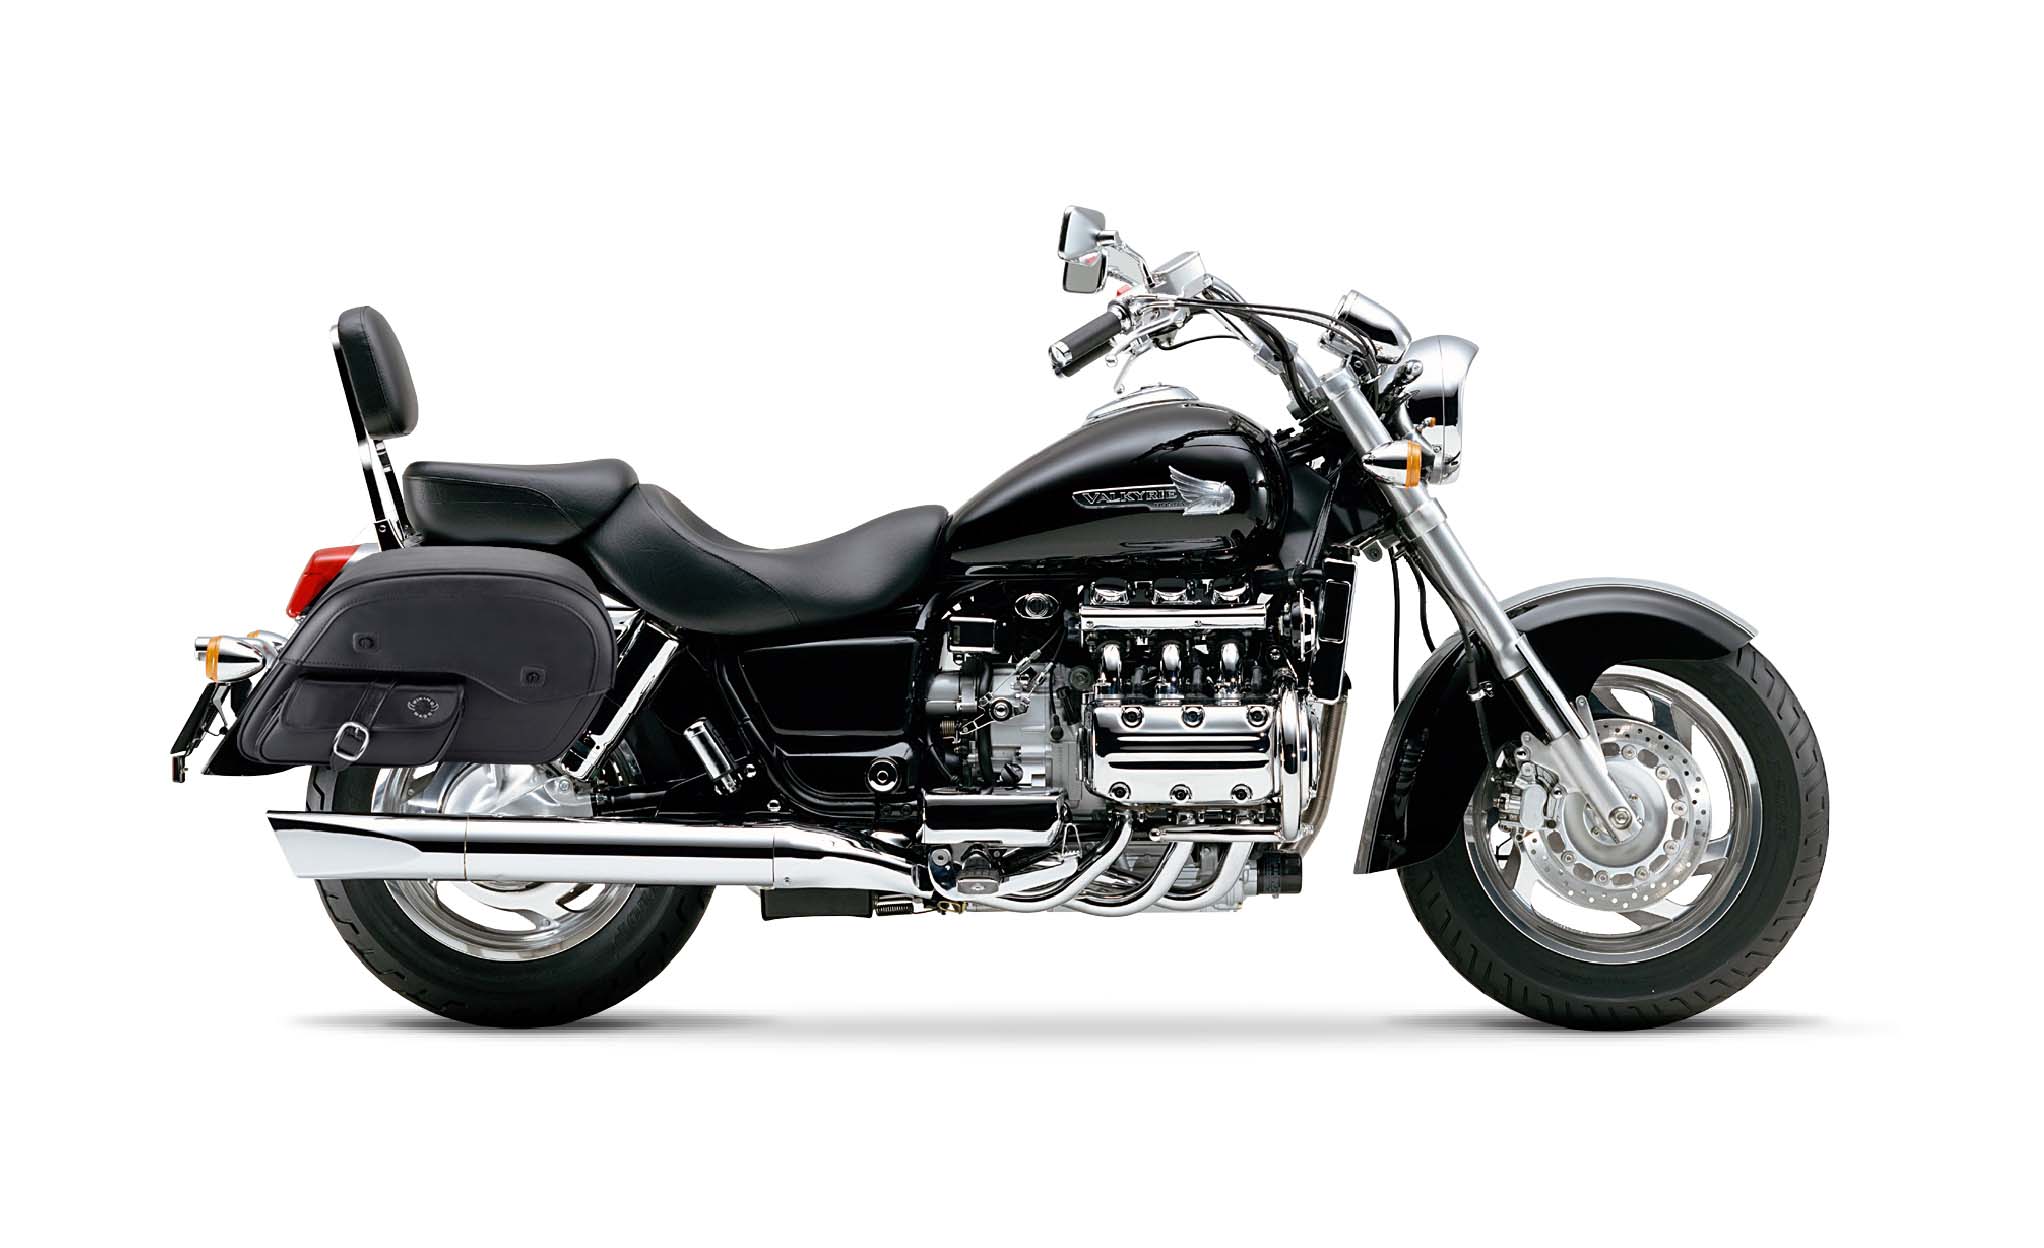 Viking Dweller Side Pocket Large Honda Valkyrie 1500 Standard Leather Motorcycle Saddlebags on Bike Photo @expand